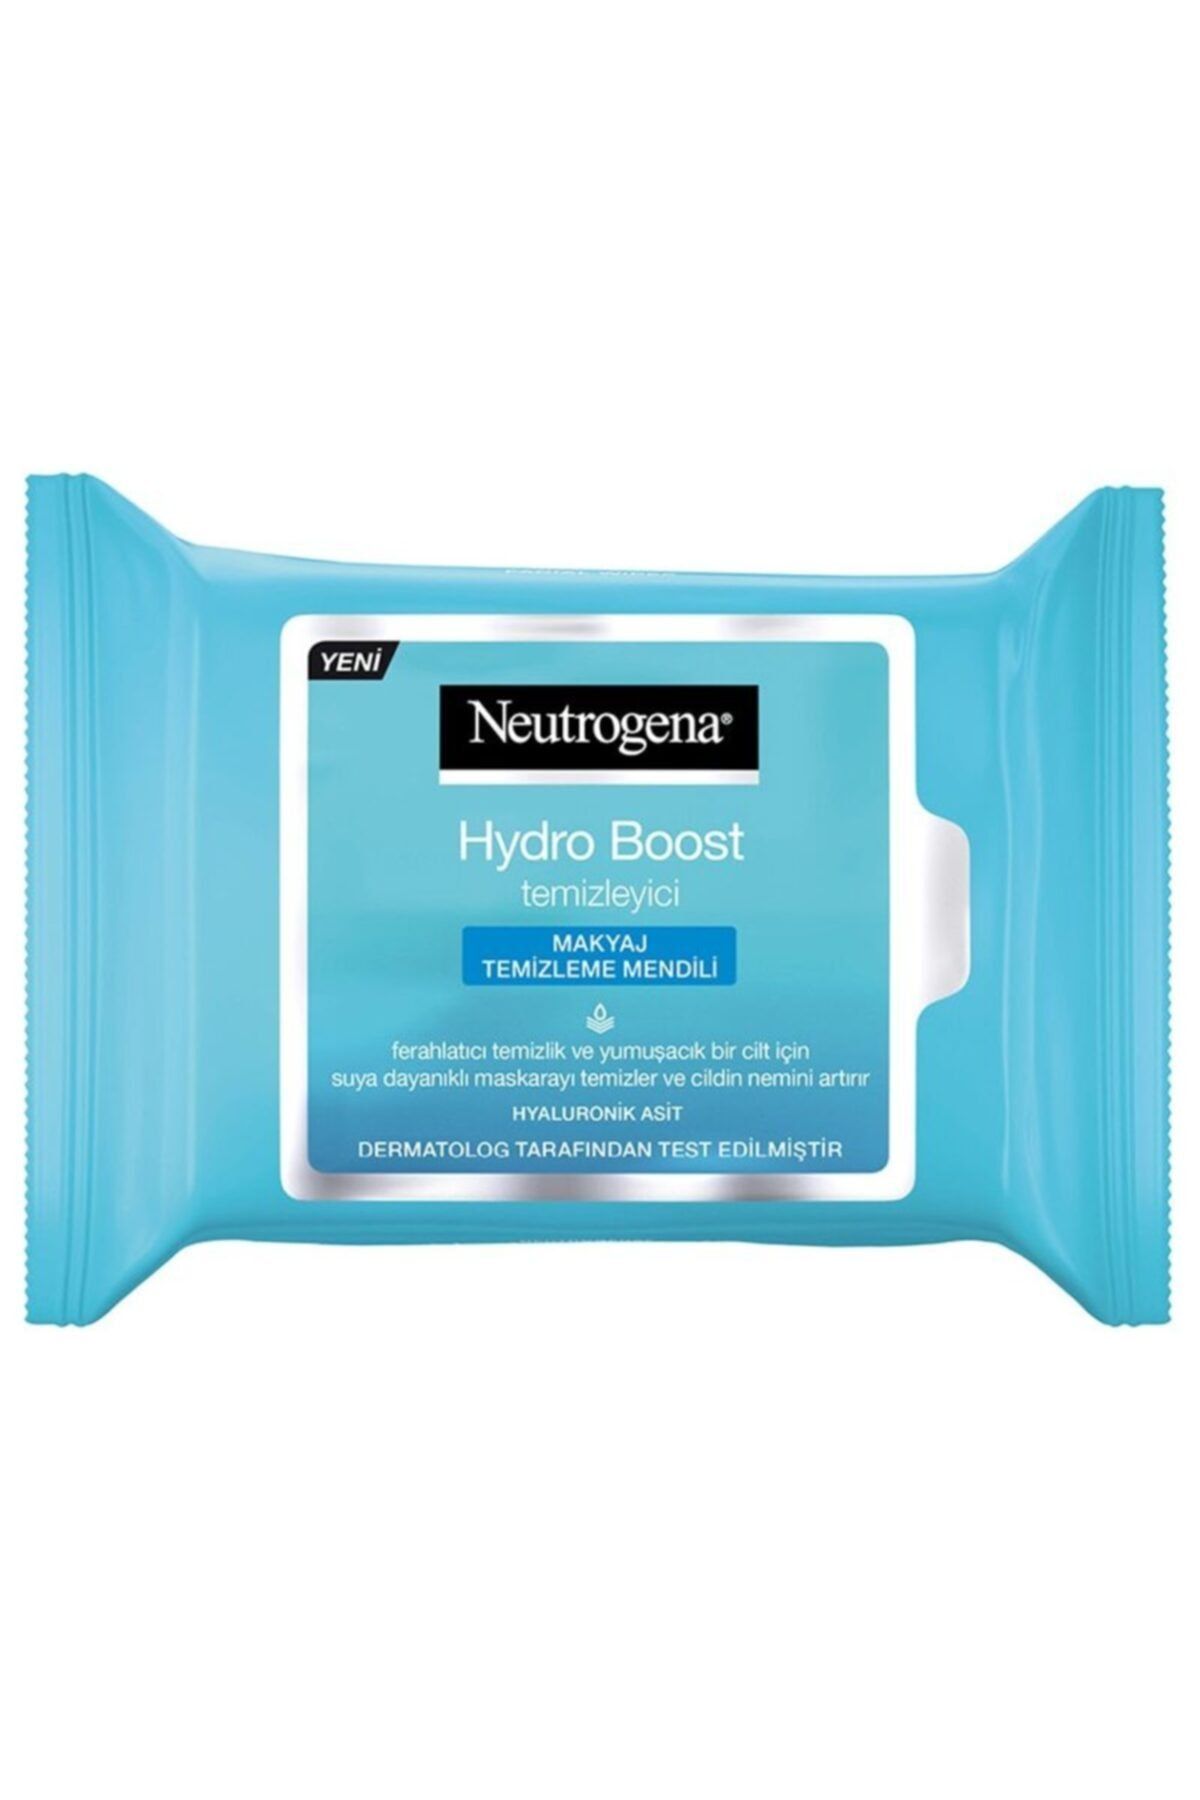 Neutrogena Hydro Boost Makyaj Temizleme Mendili 25 Adet